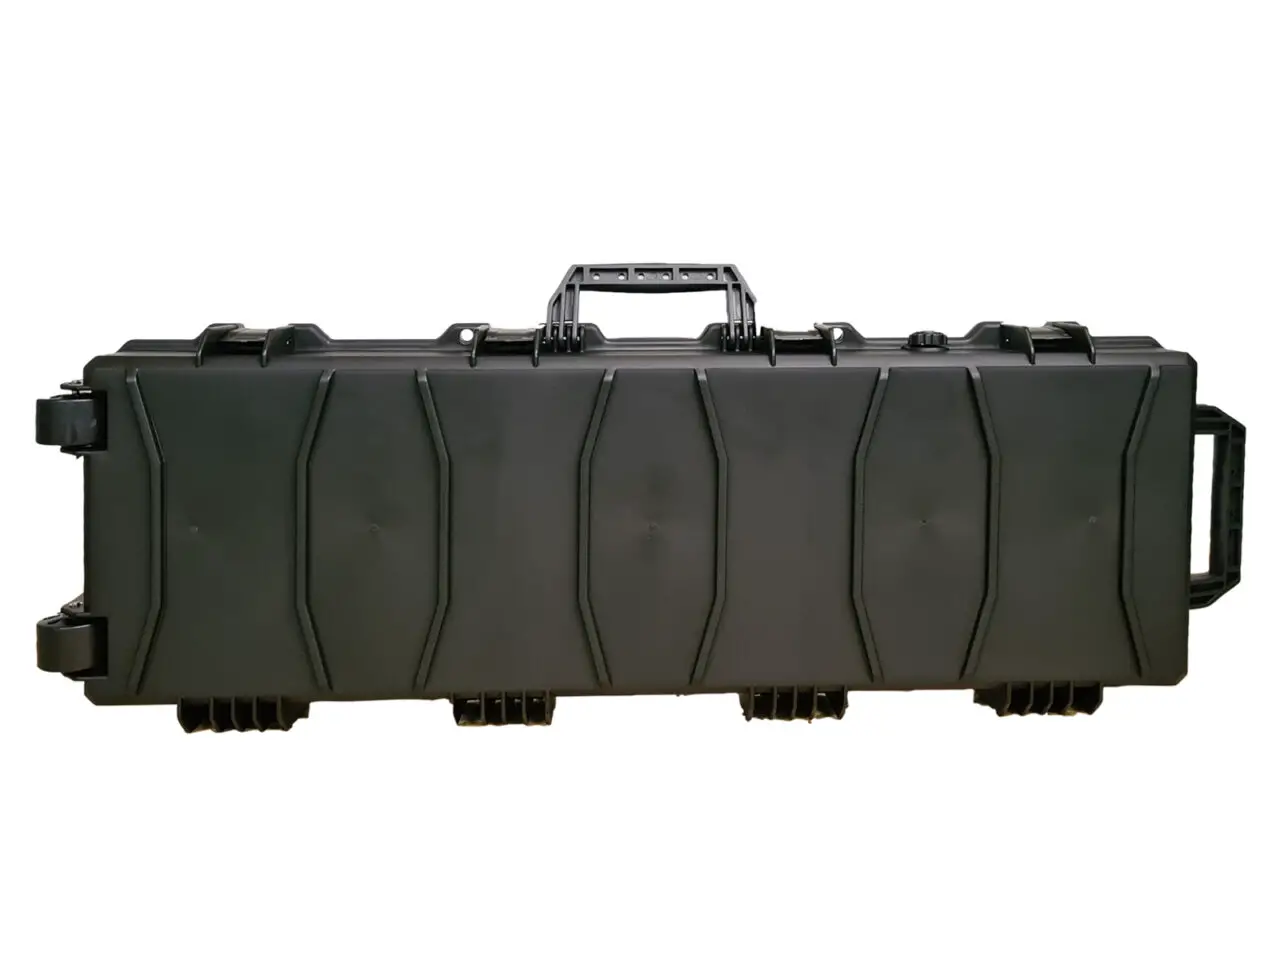 A Black Airsoft Gun Carry Case